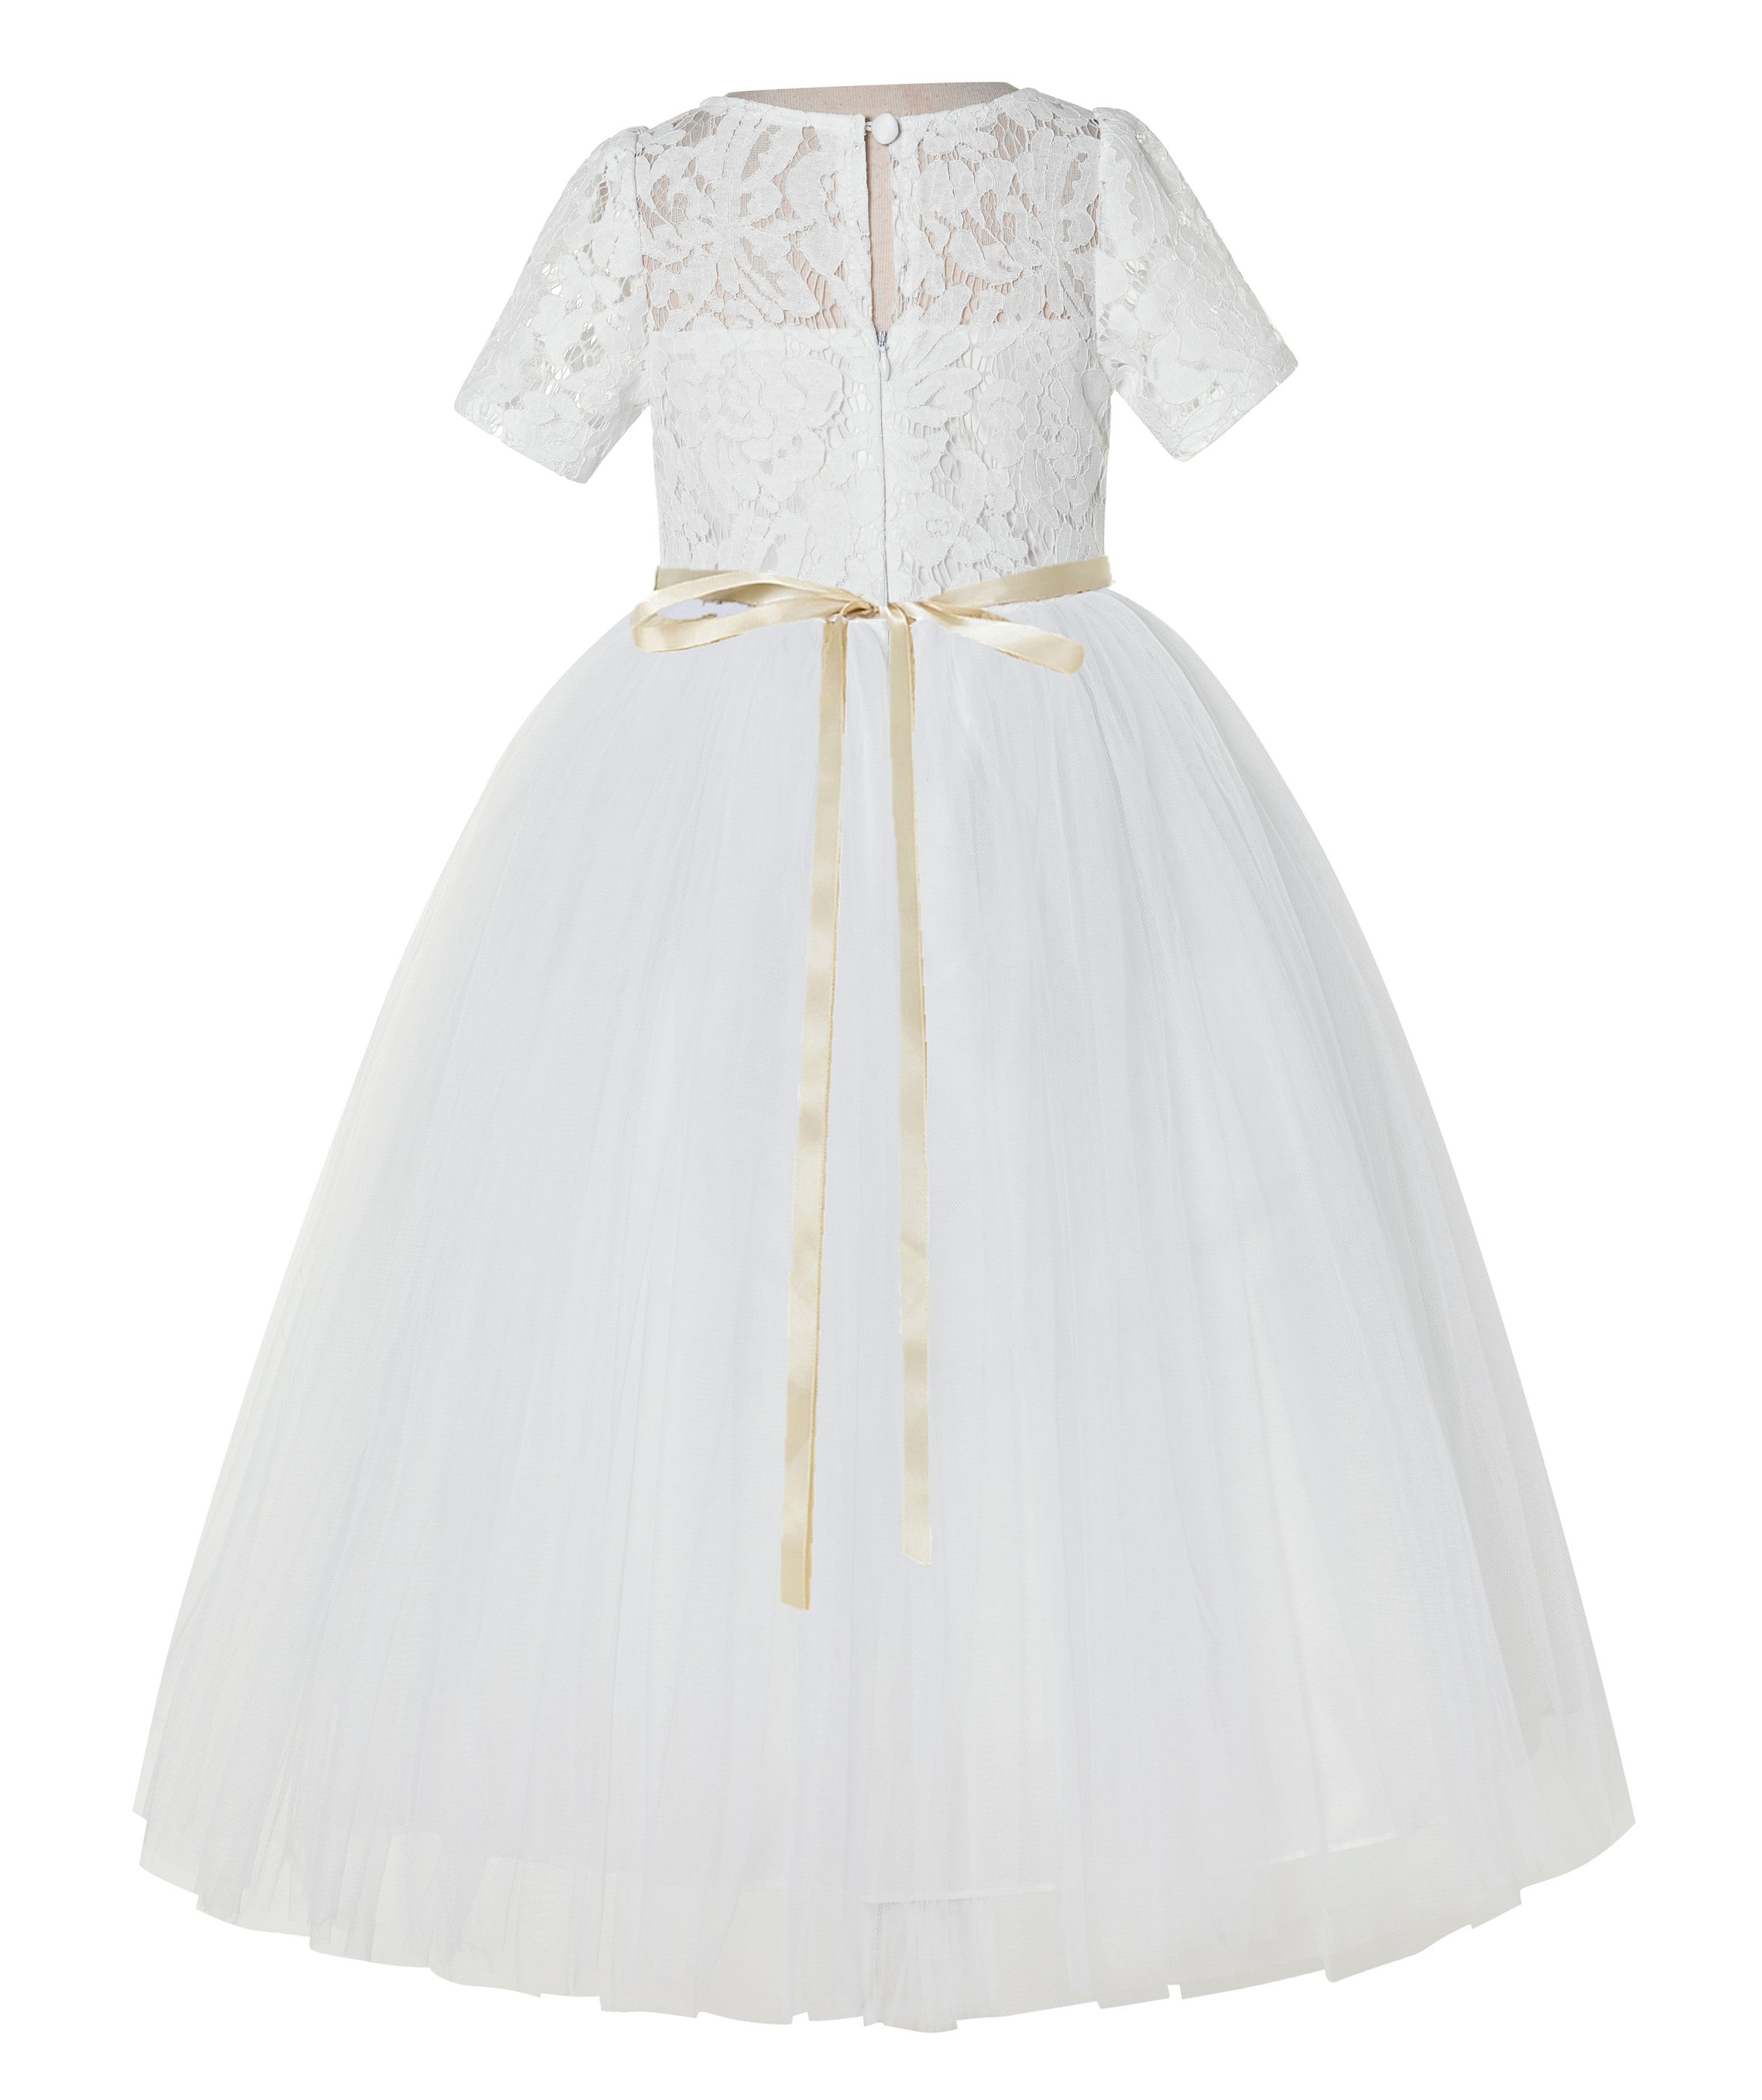 Ivory / Champagne Floral Lace Flower Girl Dress Communion Dress LG2